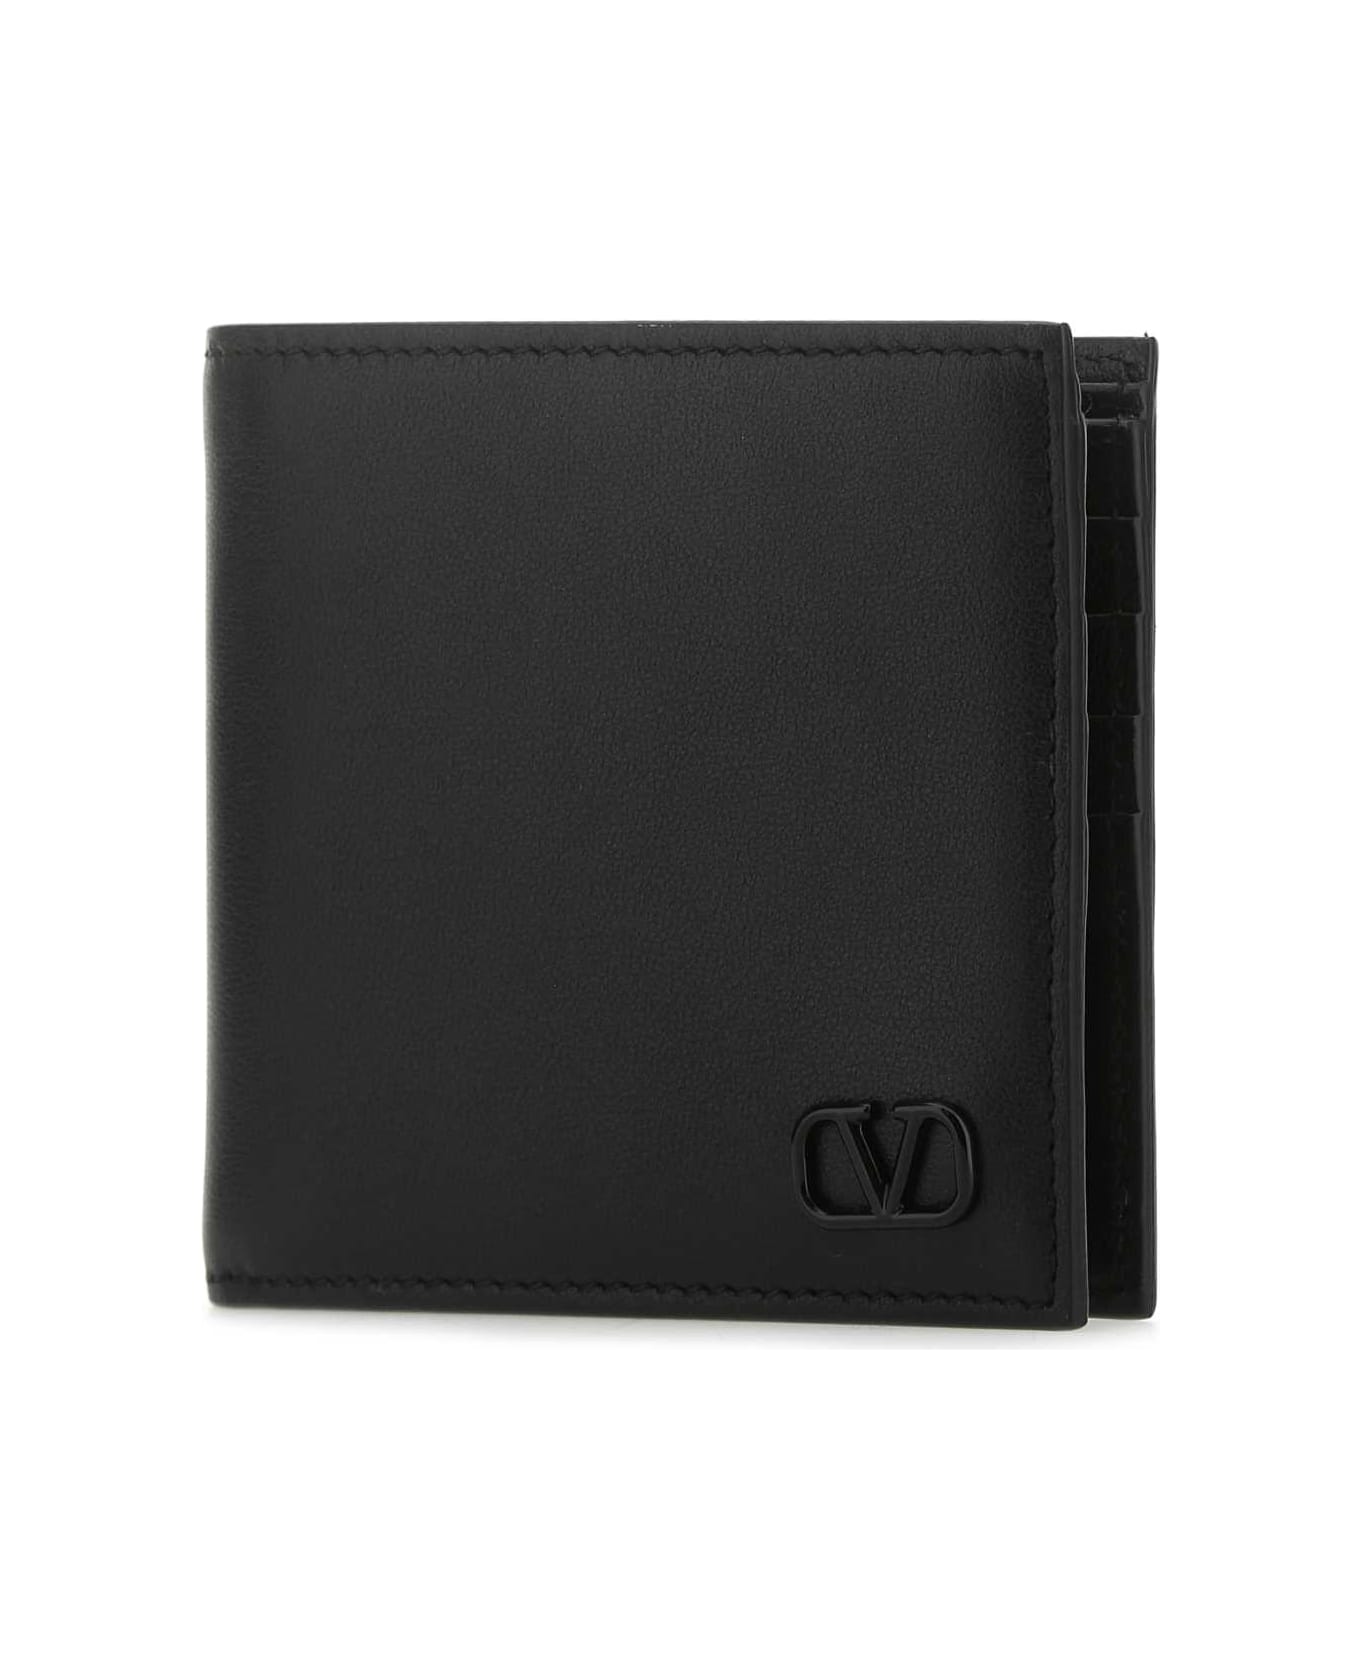 Valentino Garavani Black Leather Wallet - NERO